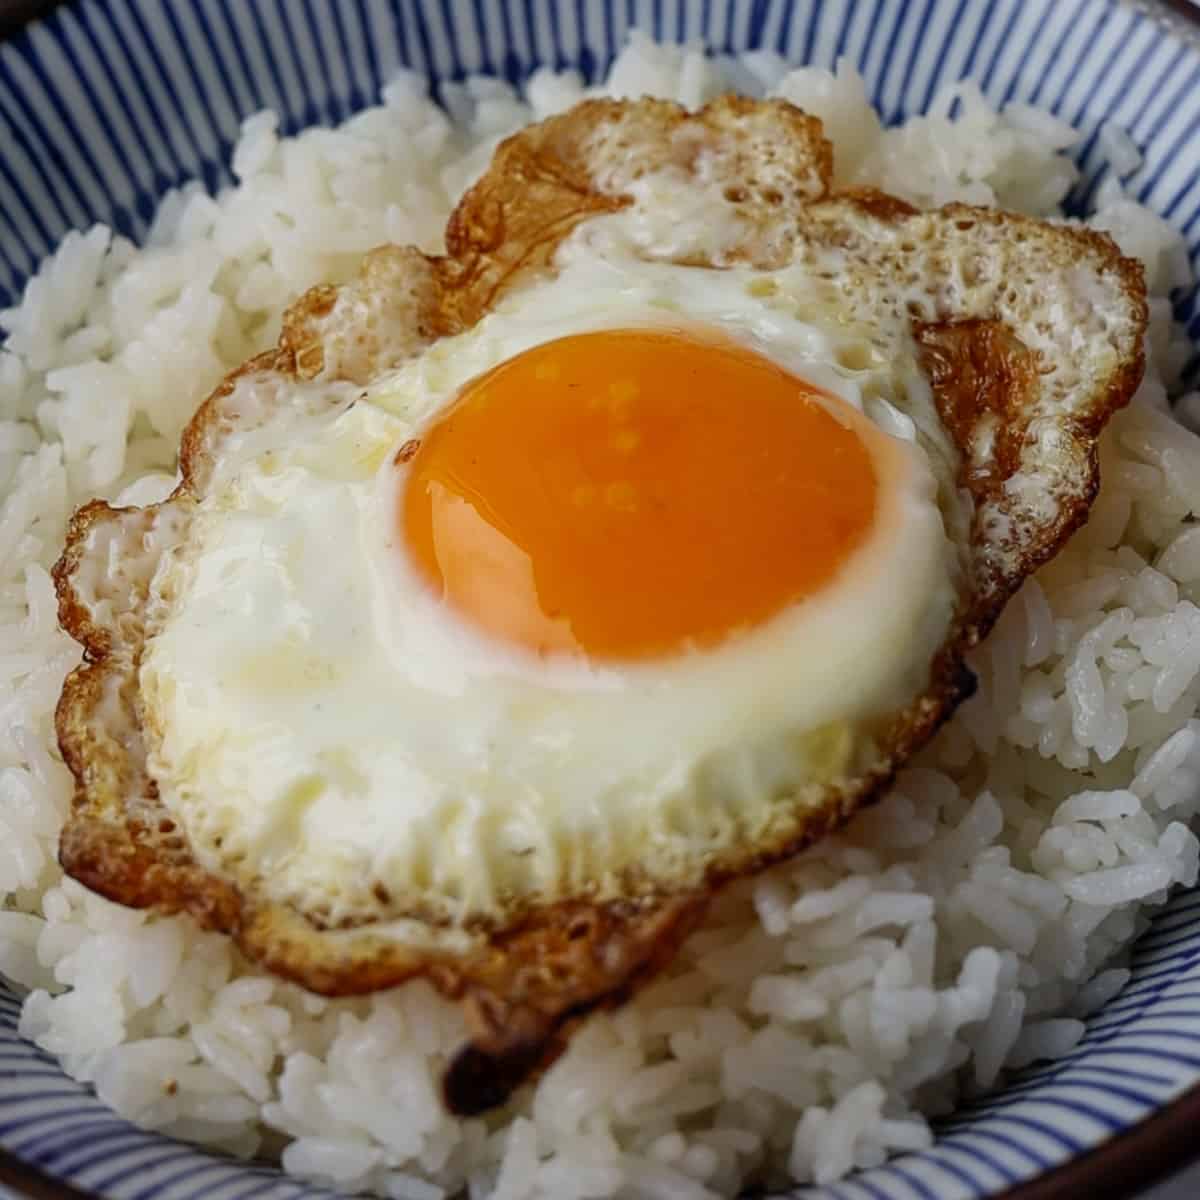 transfer egg to rice